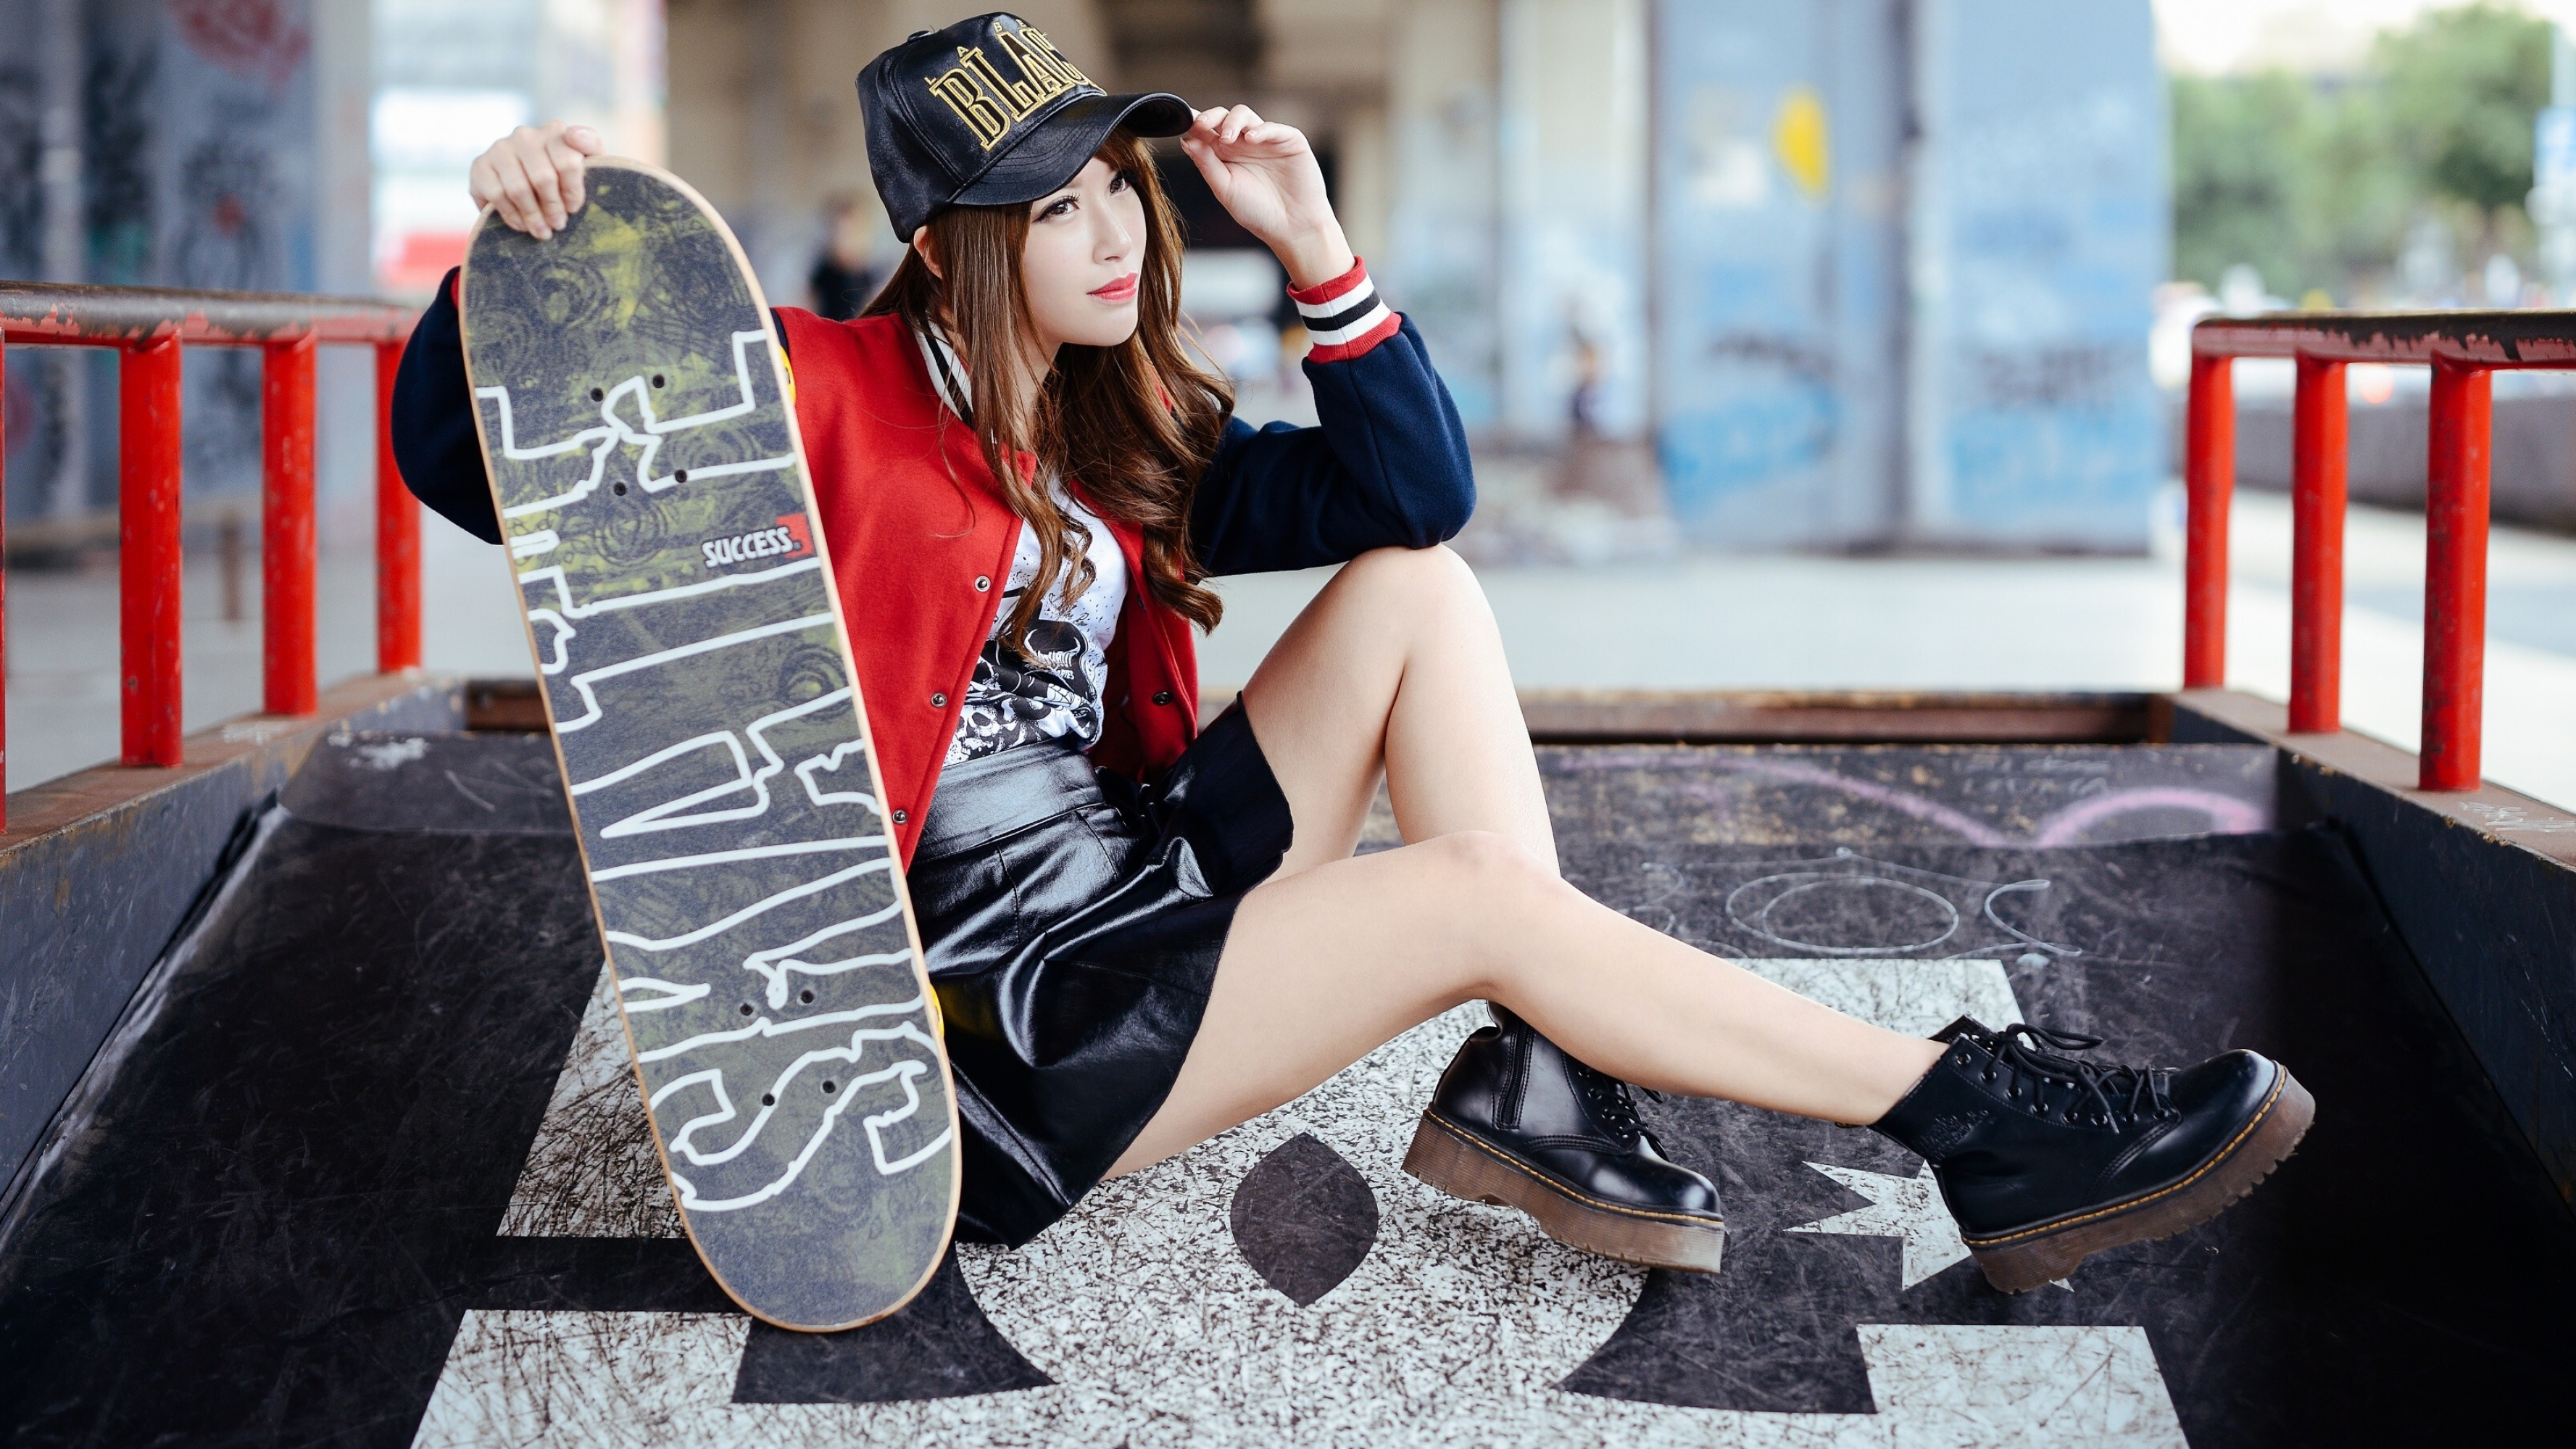 Girl Skateboarding: Skateboard deck design, Wheelbase, The nose and the tail, Bomber jacket. 3560x2000 HD Wallpaper.